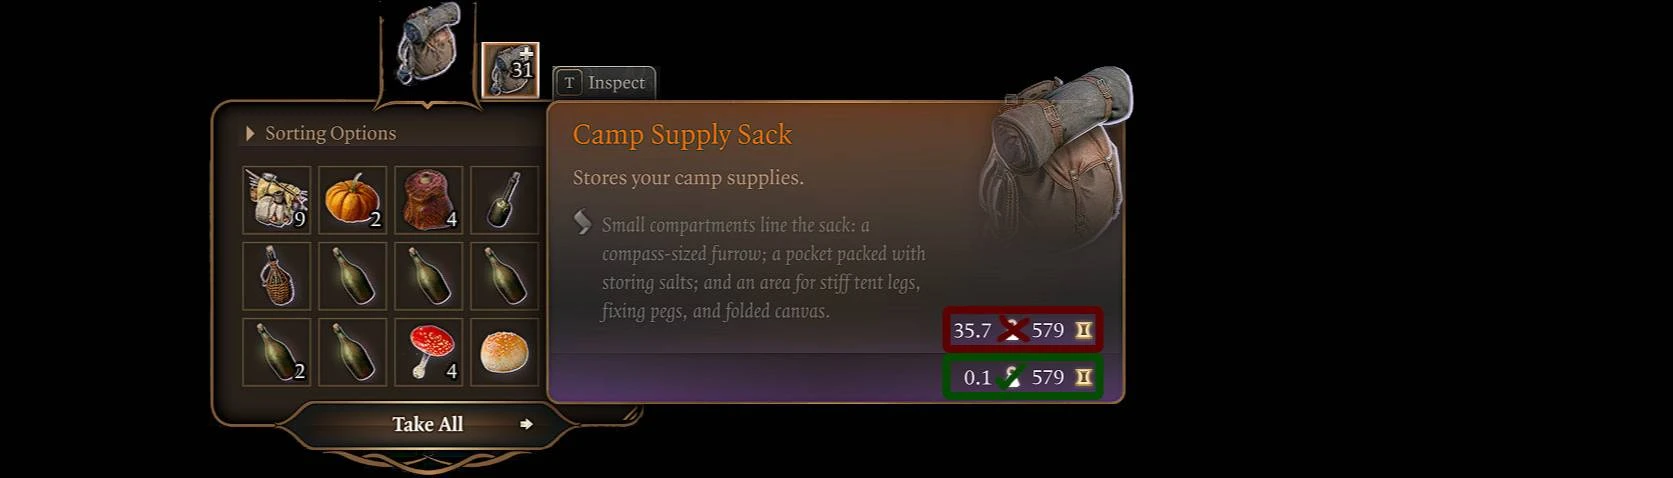 How to get more Camp Supplies - Baldur's Gate 3